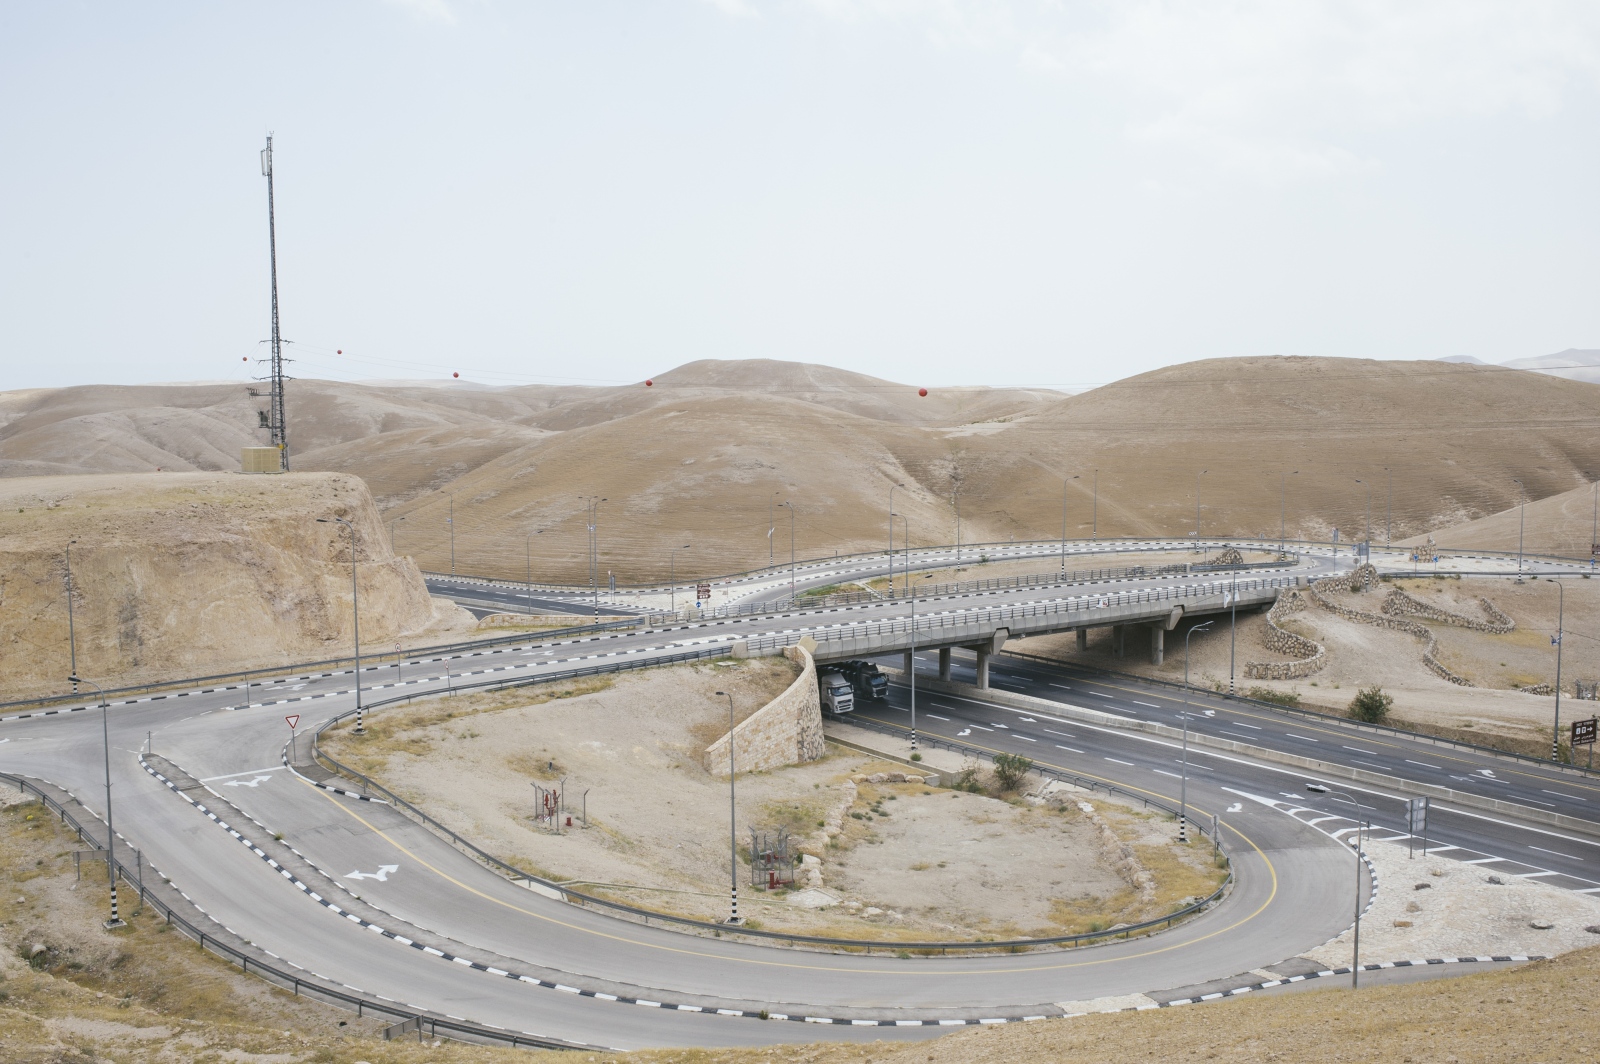  West Bank, 2018 - Roads 